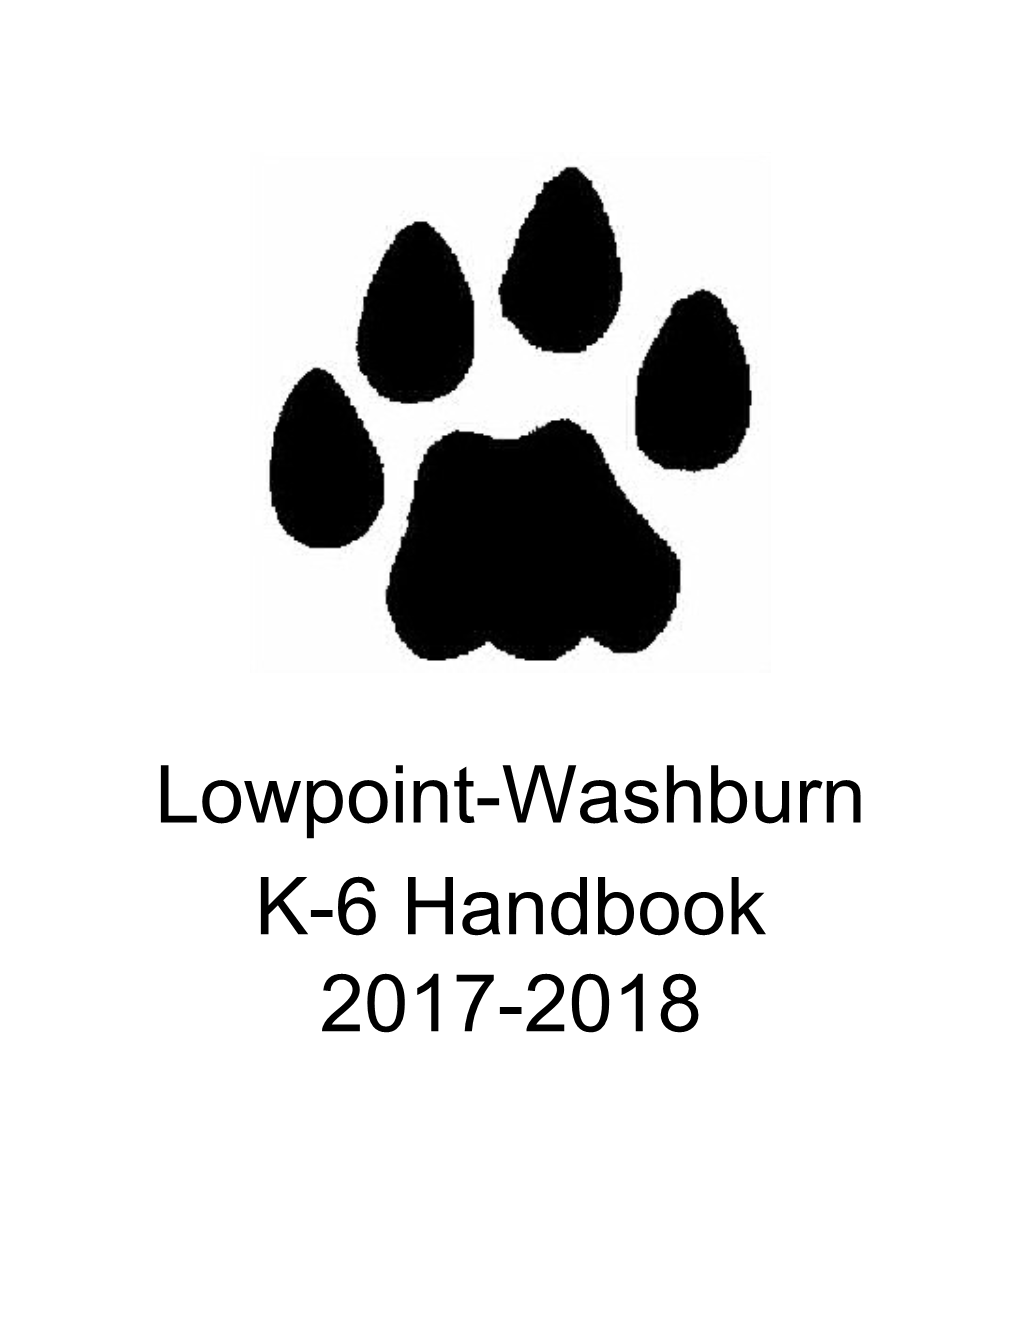 Lowpoint Washburn C.U.S.D. #21